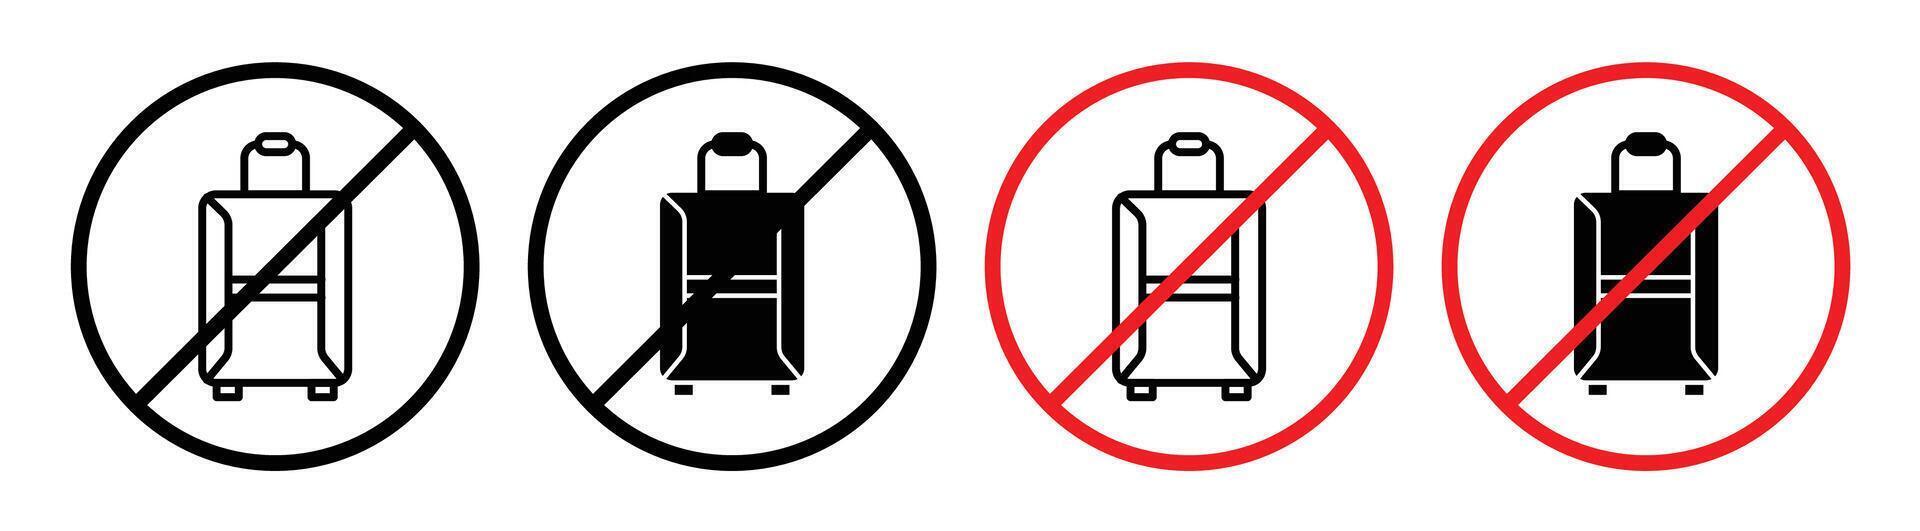 Forbidden luggage sign vector